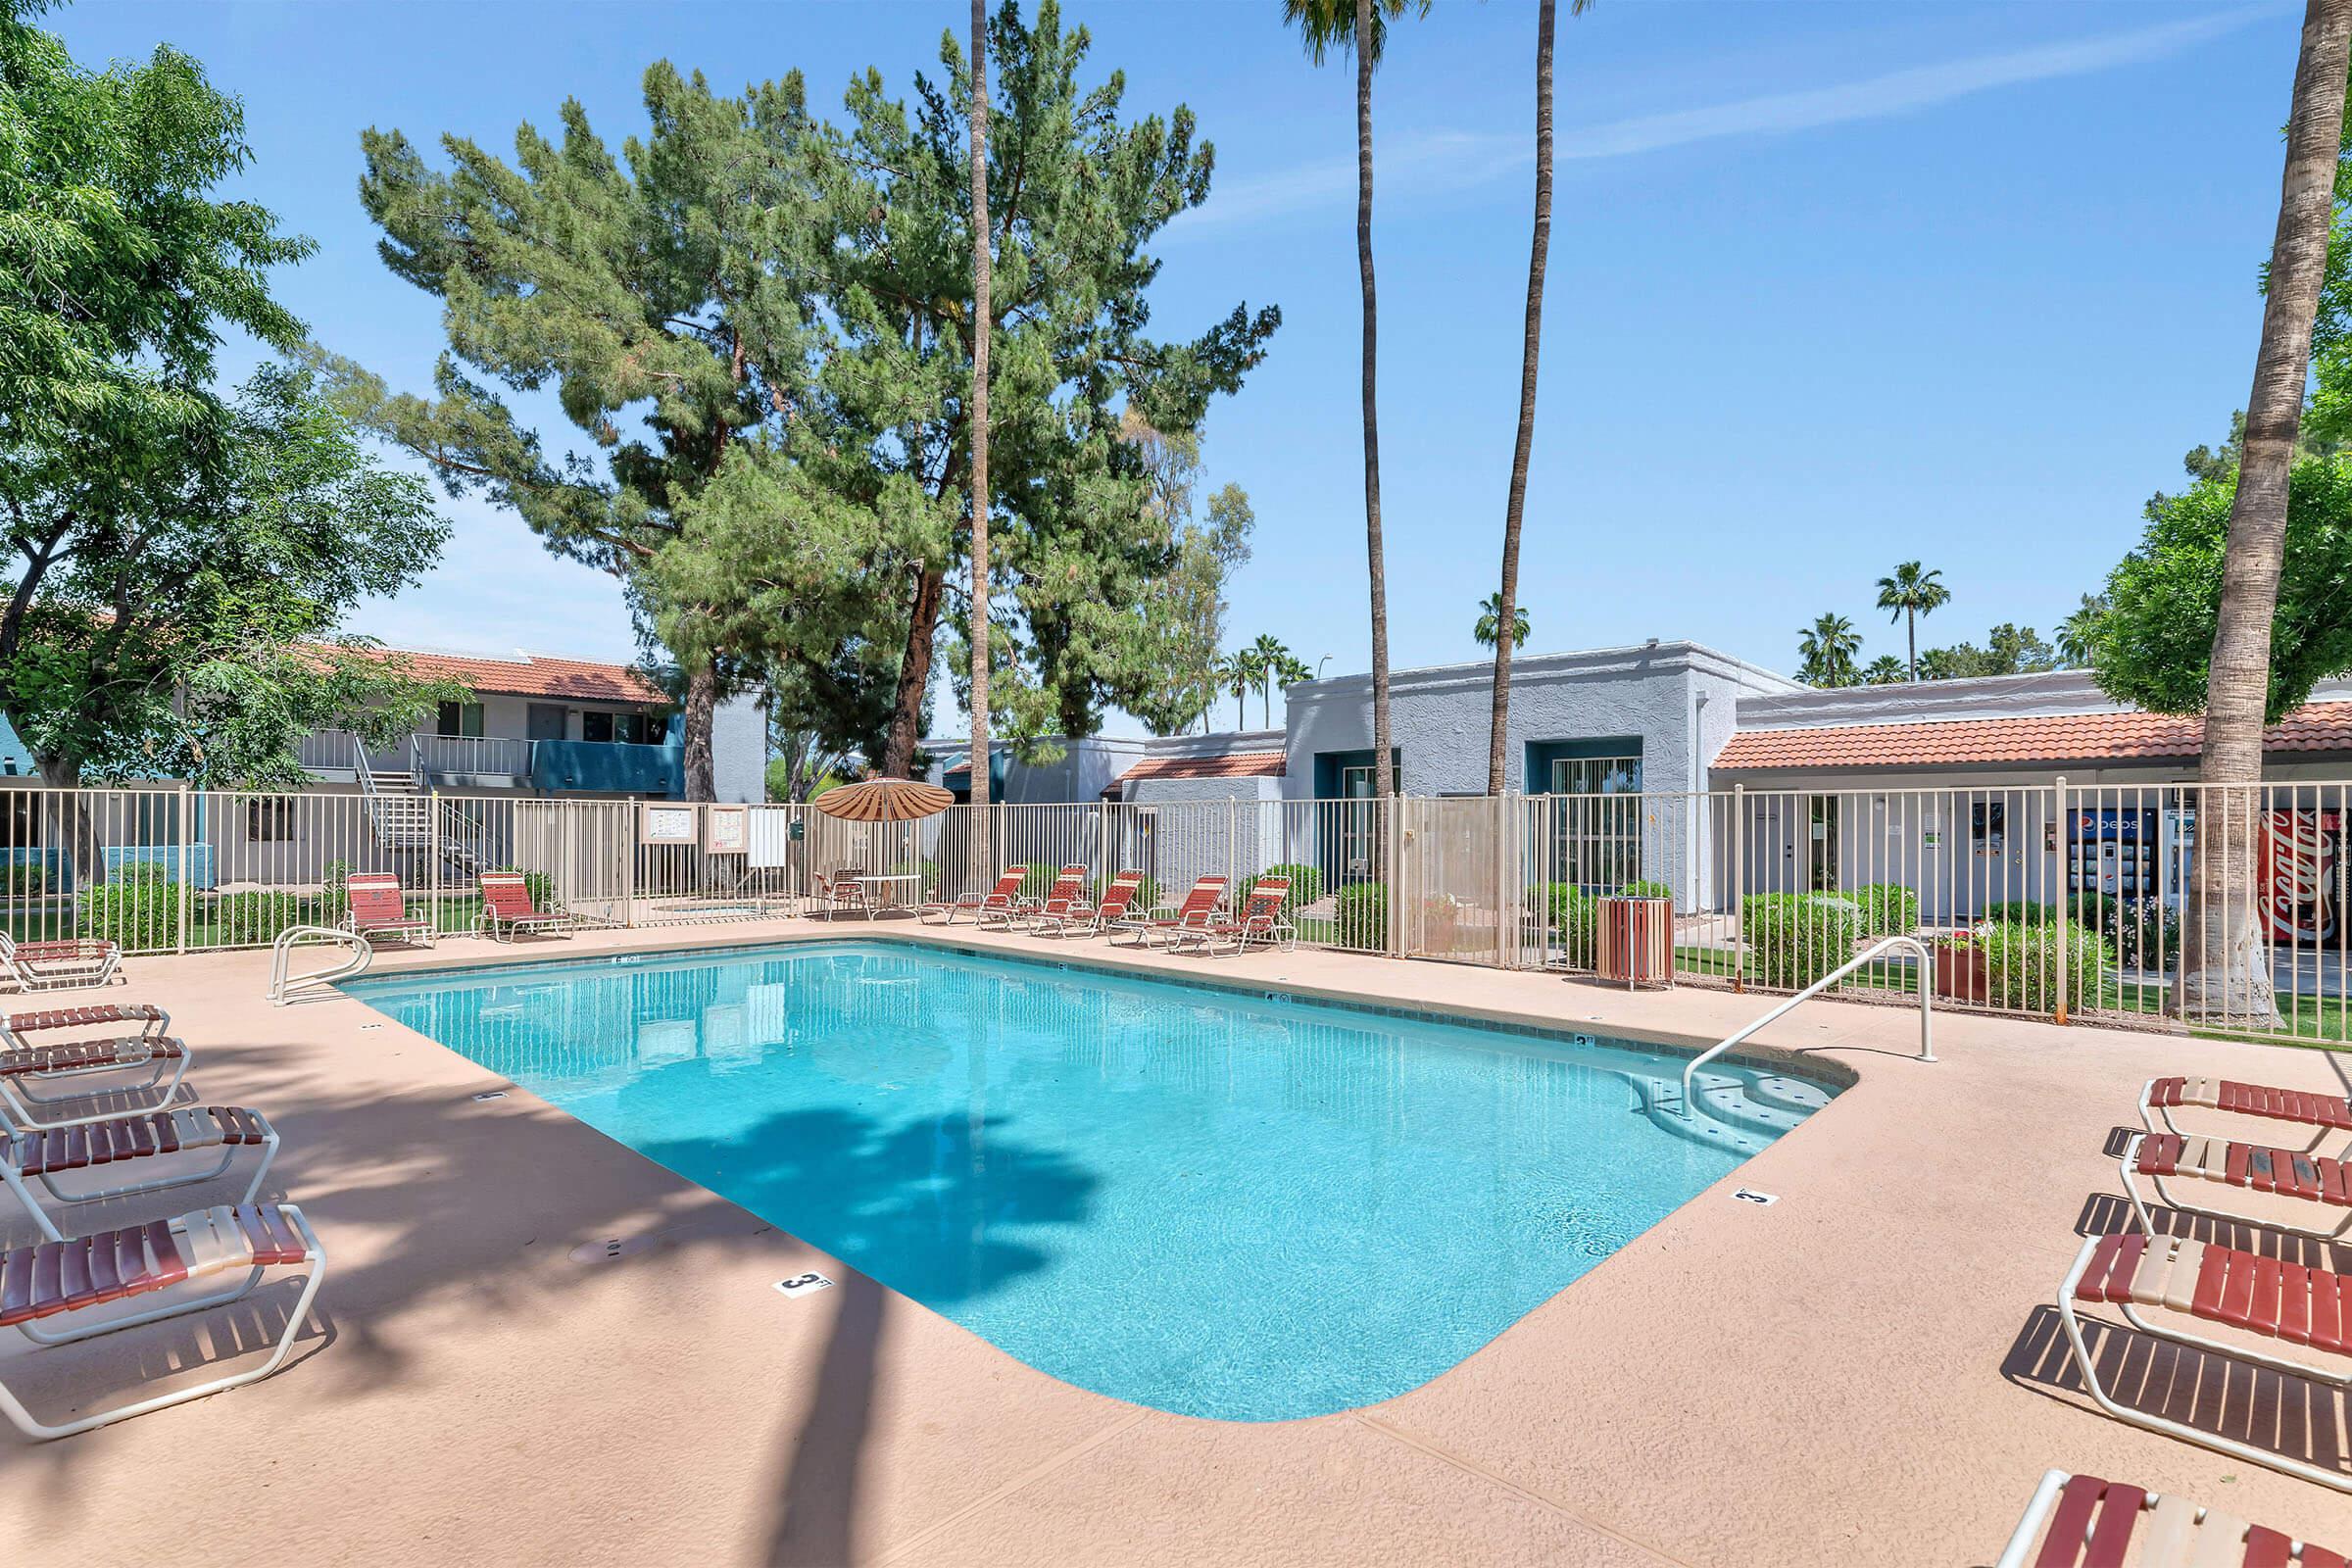 a pool next to a palm tree